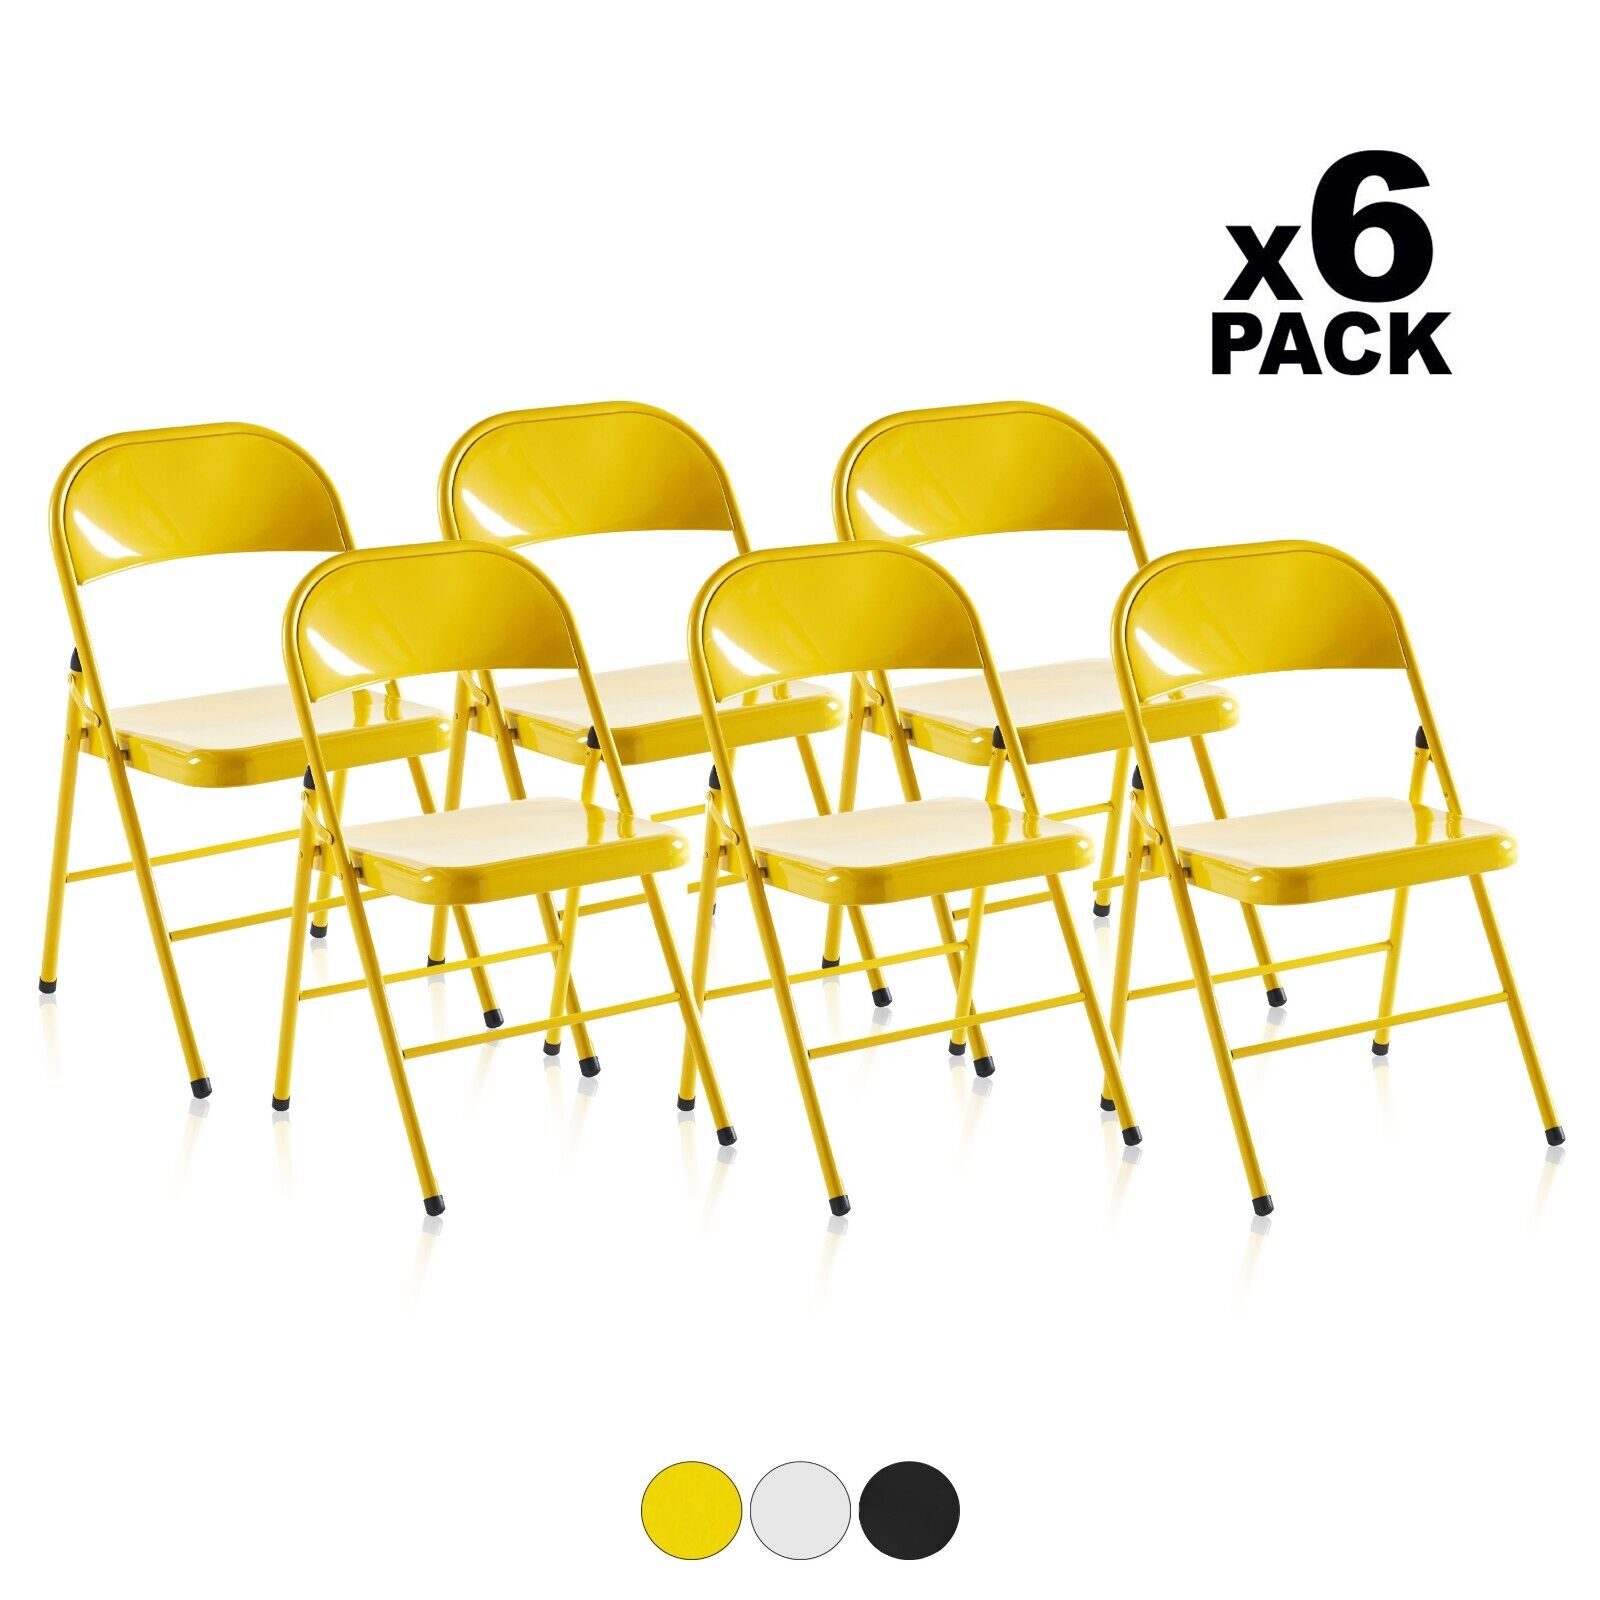 Pack 6 sillas plegables auxiliares color negro, blanco, amarillo, Six